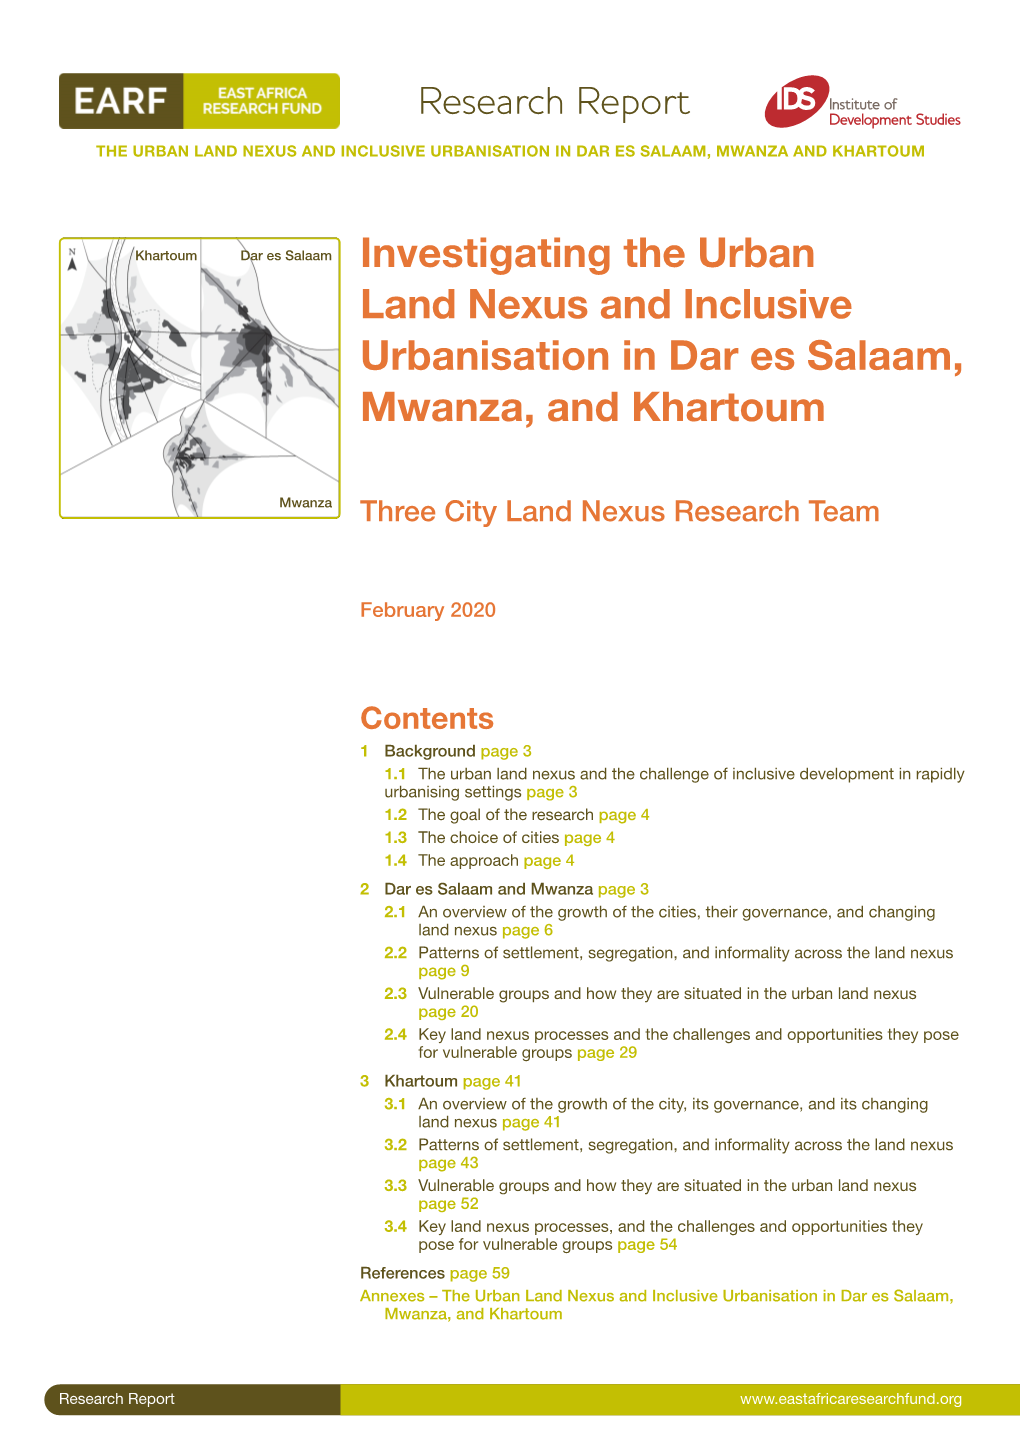 Investigating the Urban Land Nexus and Inclusive Urbanisation in Dar Es Salaam, Mwanza, and Khartoum